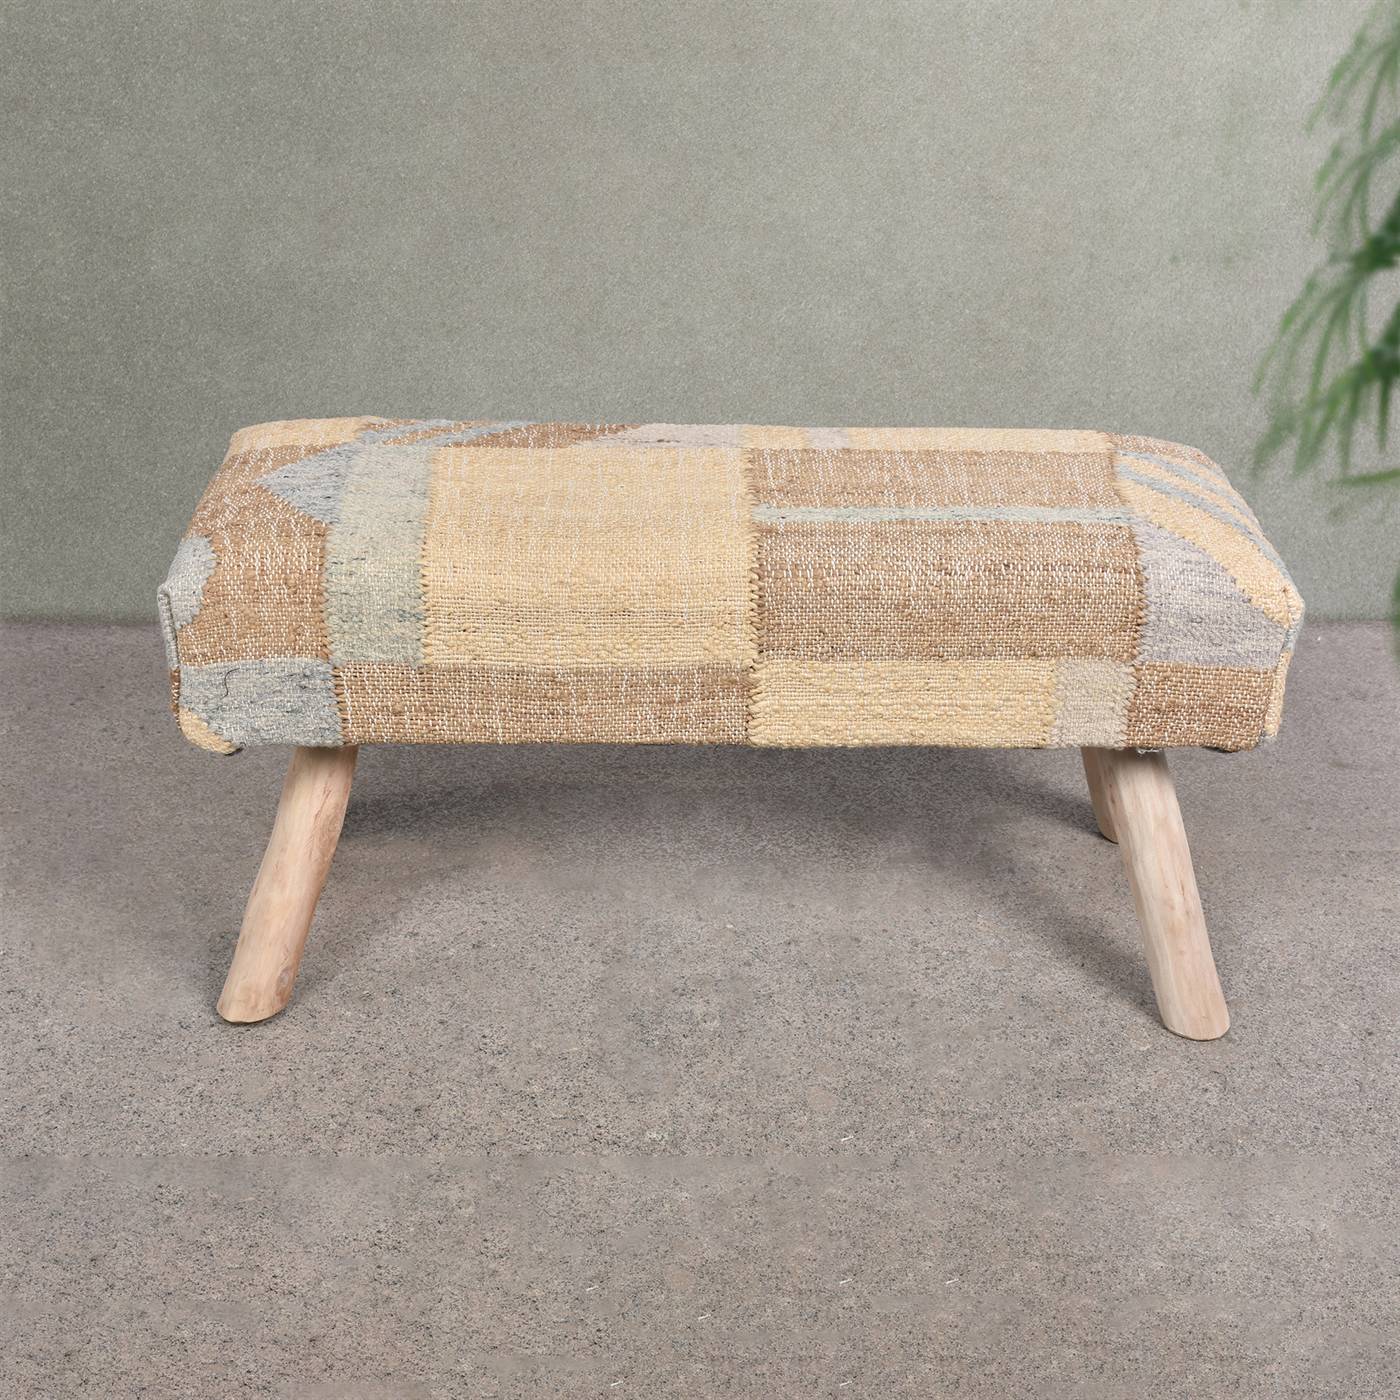 Palco Bench, 80x30x40 cm, Natural, Natural White, Jute, Wool, Hand Woven, Punja, Flat Weave